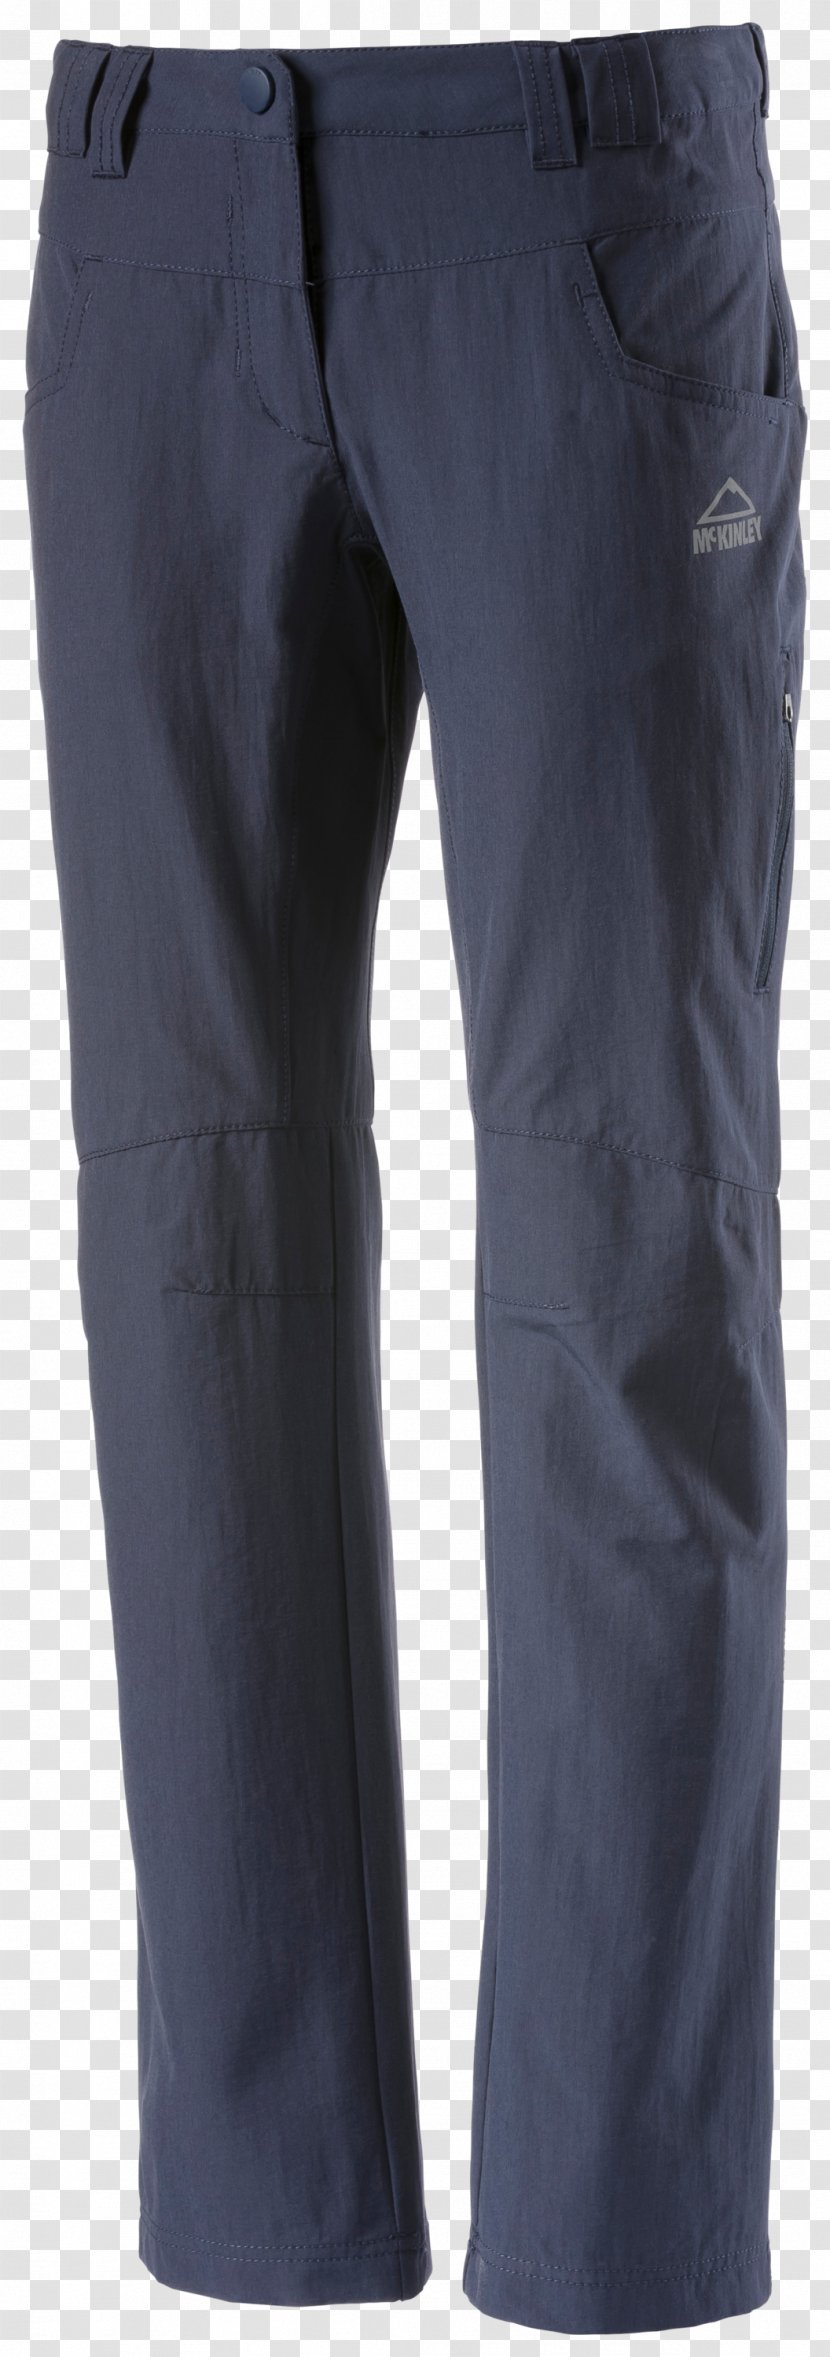 Pants Columbia Sportswear Clothing Discounts And Allowances Женская одежда - Shorts - Jacket Transparent PNG